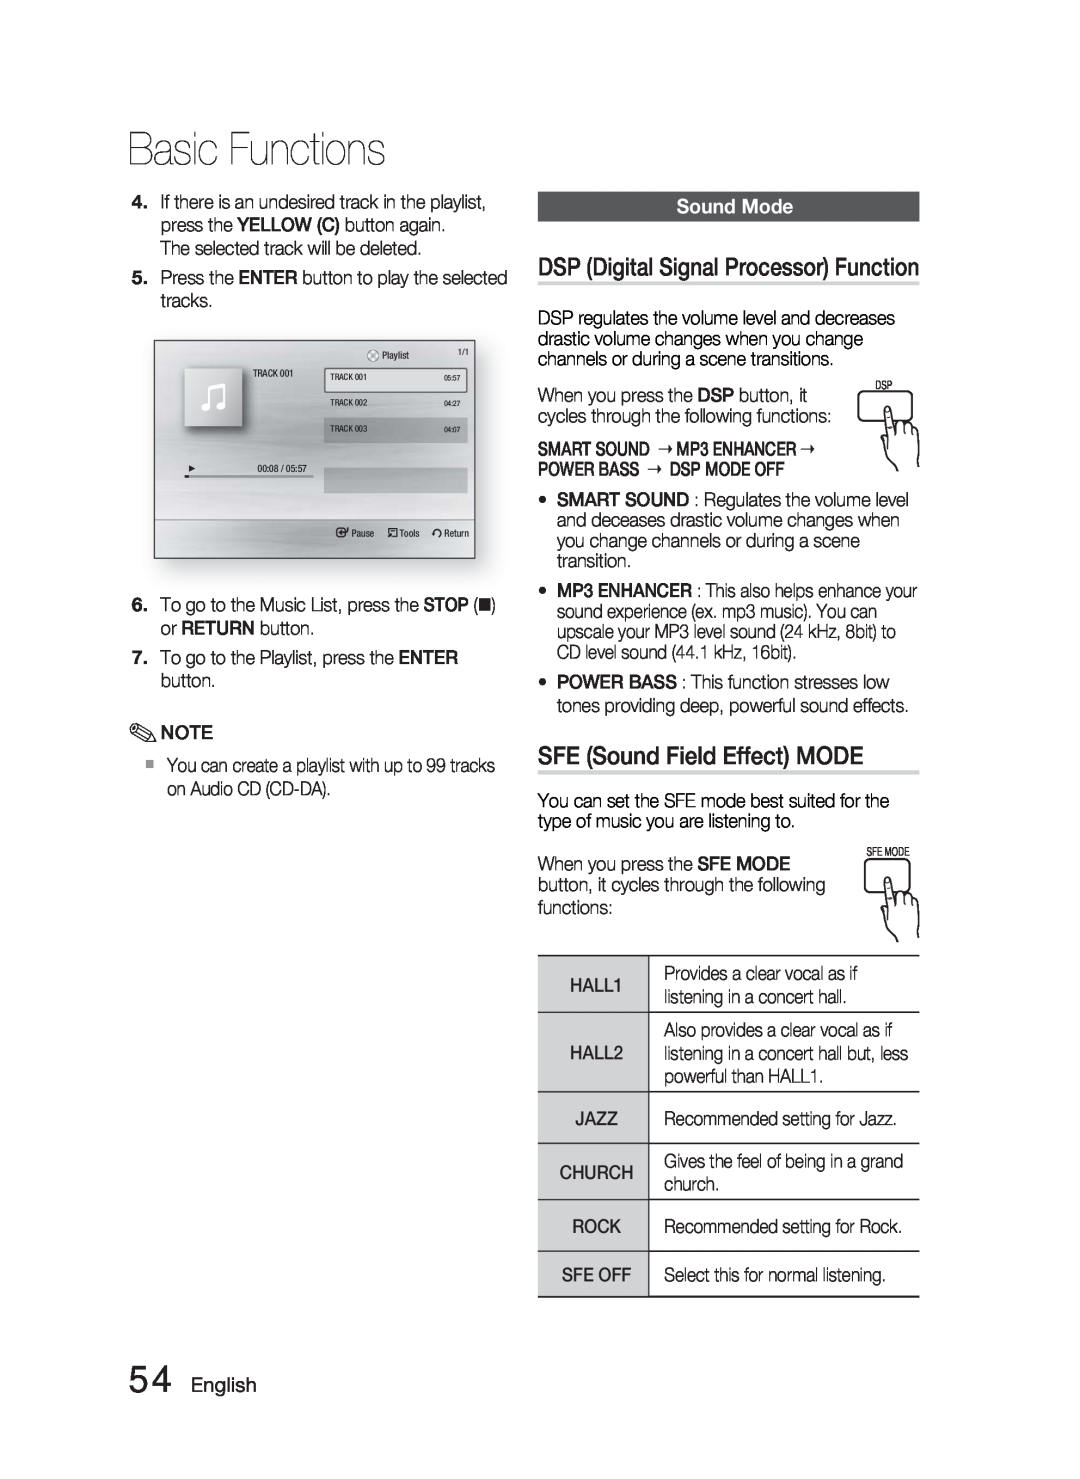 Samsung HT-C6900W DSP Digital Signal Processor Function, SFE Sound Field Effect MODE, Sound Mode, English, Basic Functions 